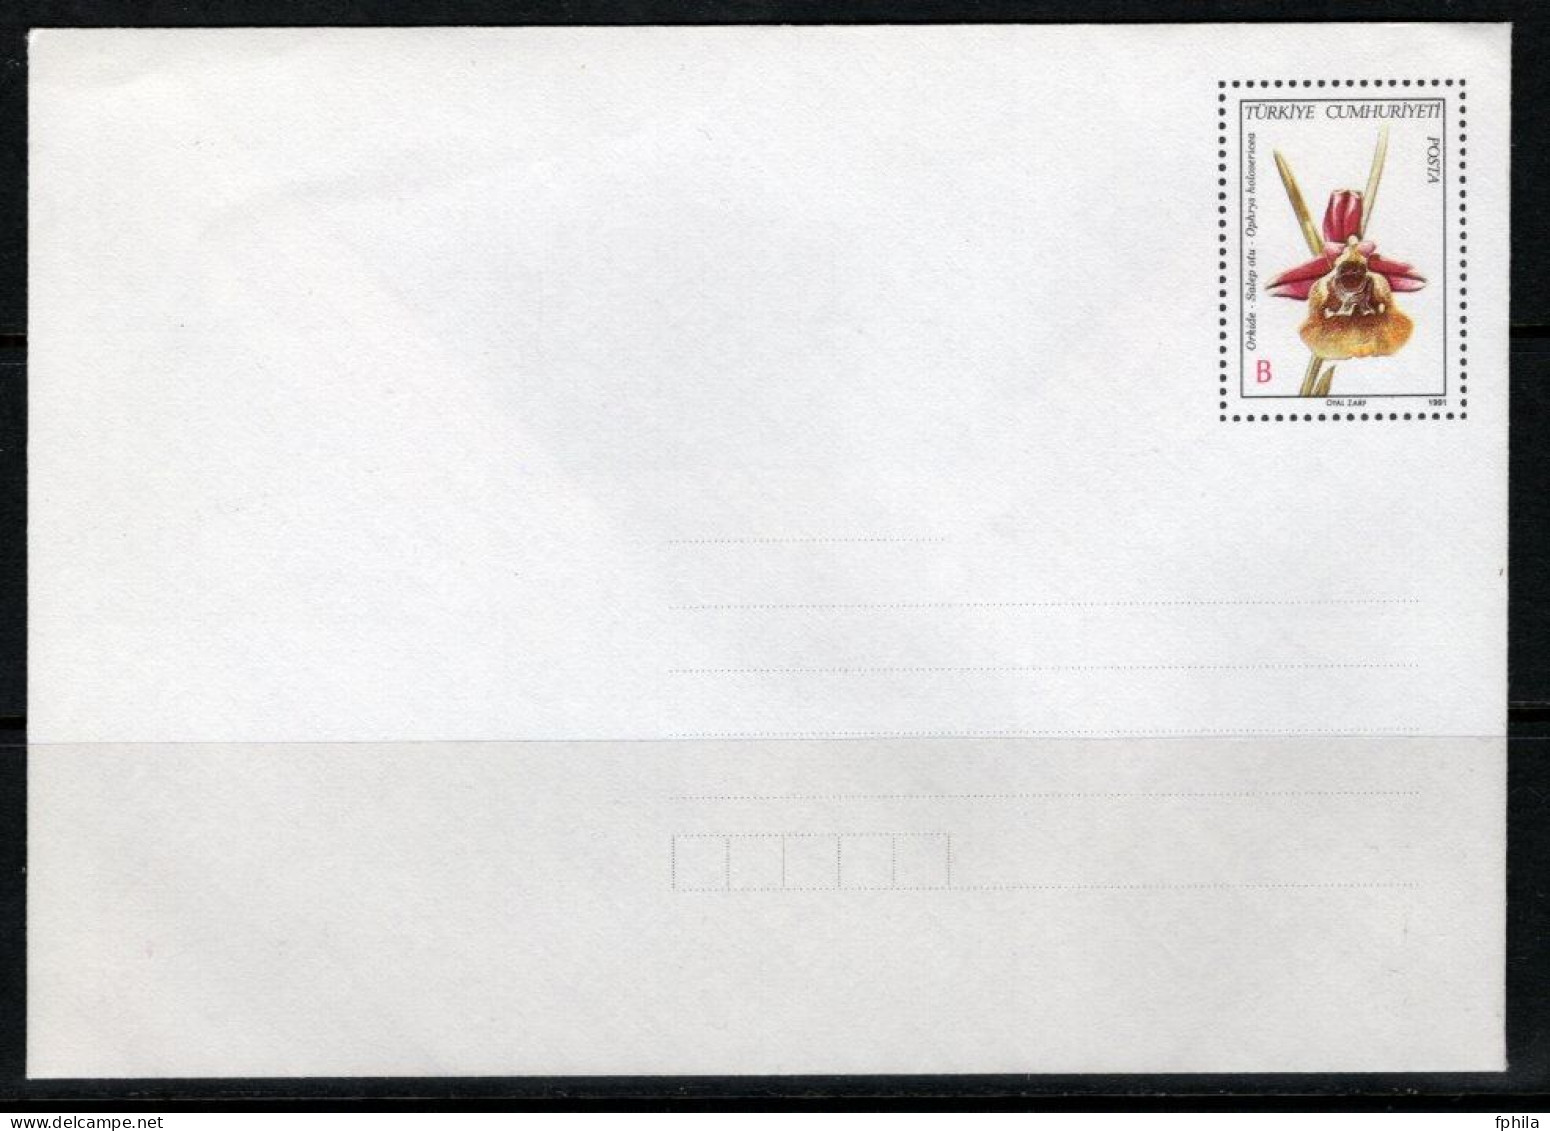 1991 TURKEY LETTER ENVELOPE WITH ORCHID ILLUSTRATION - Postal Stationery